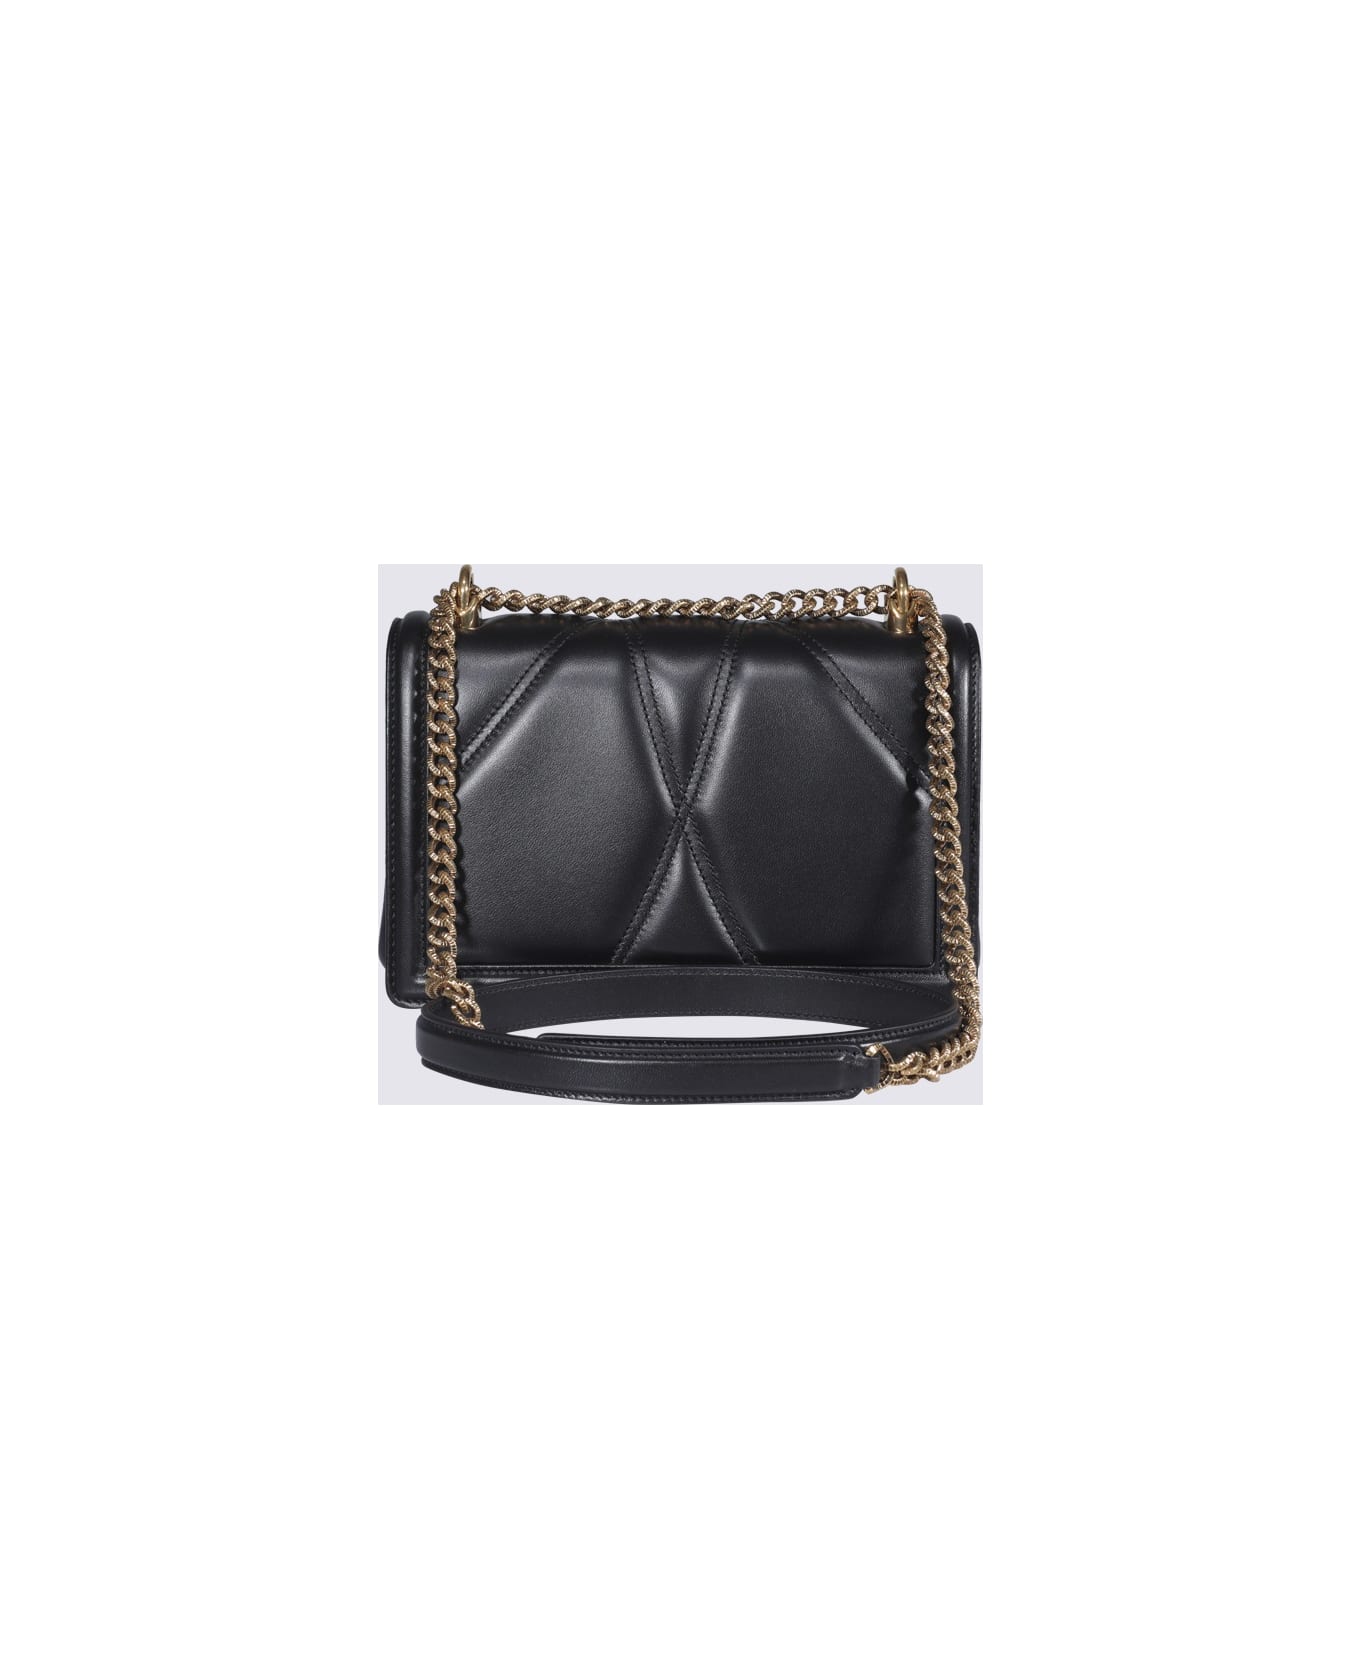 Dolce & Gabbana Black Leather Devotion Crossbody Bag - Black